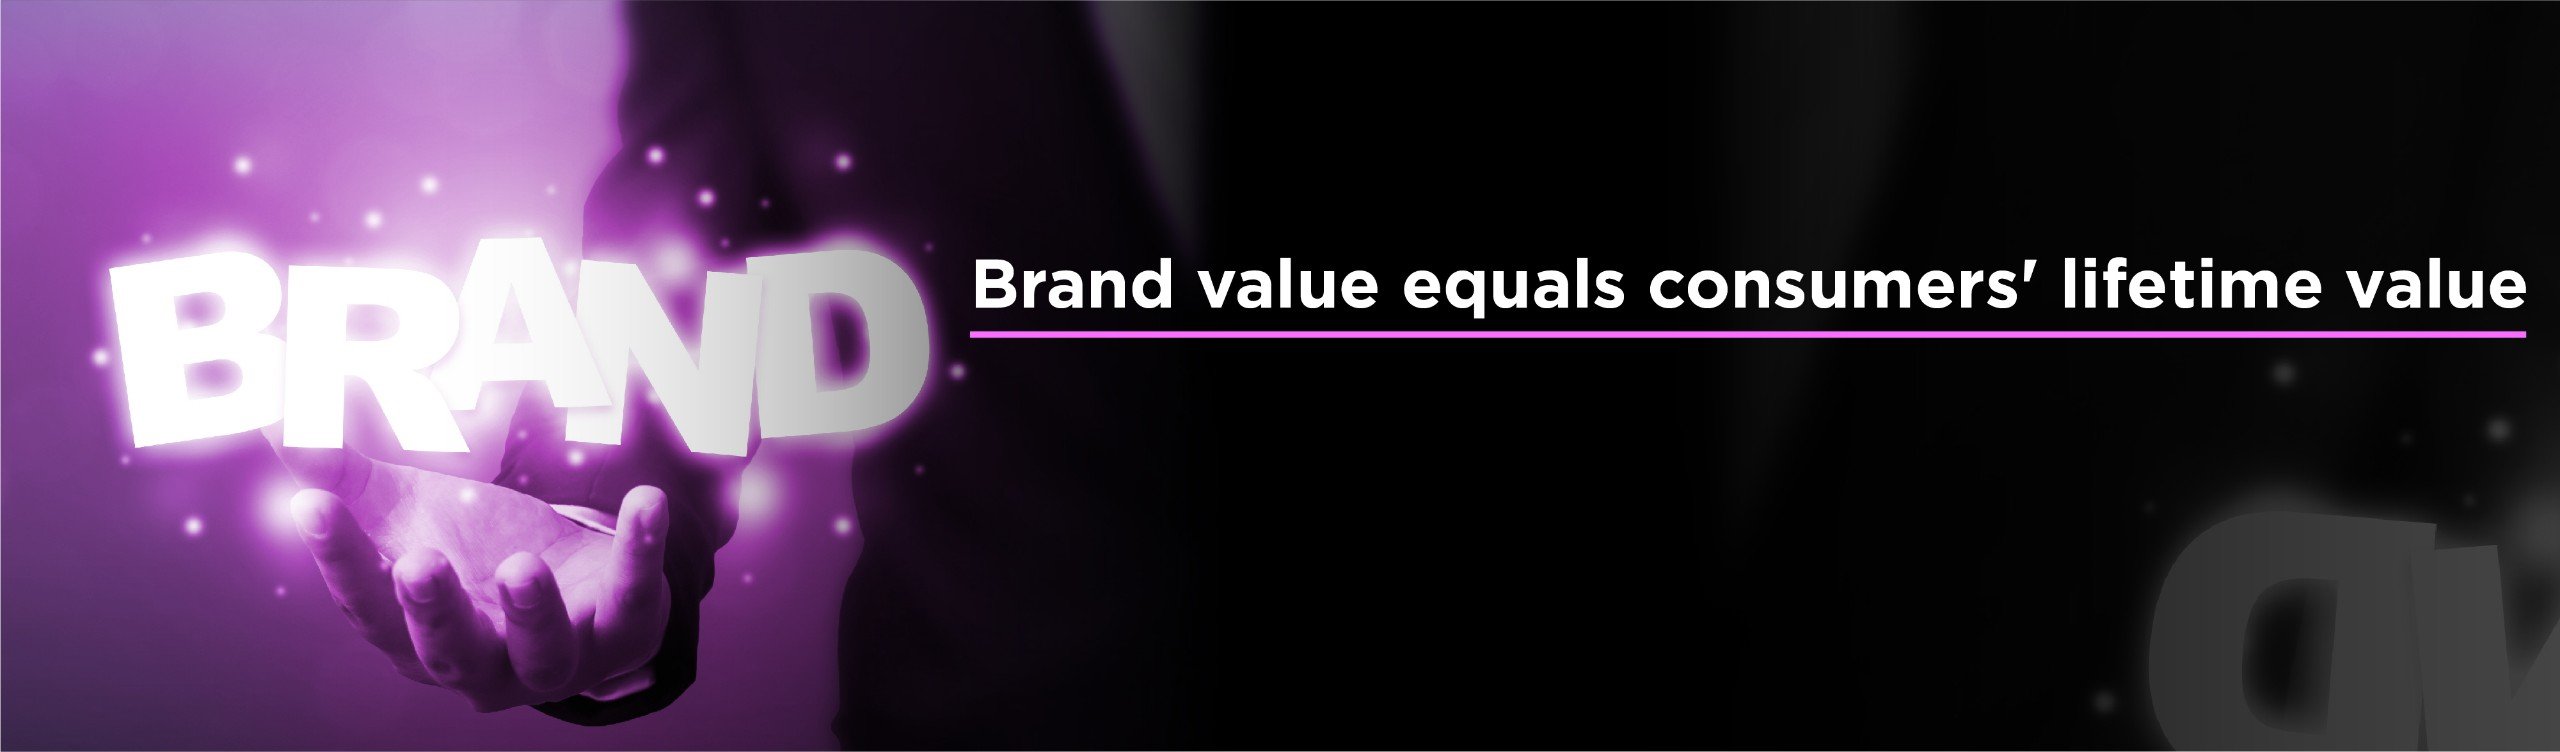 Brand value equals consumers’ lifetime value